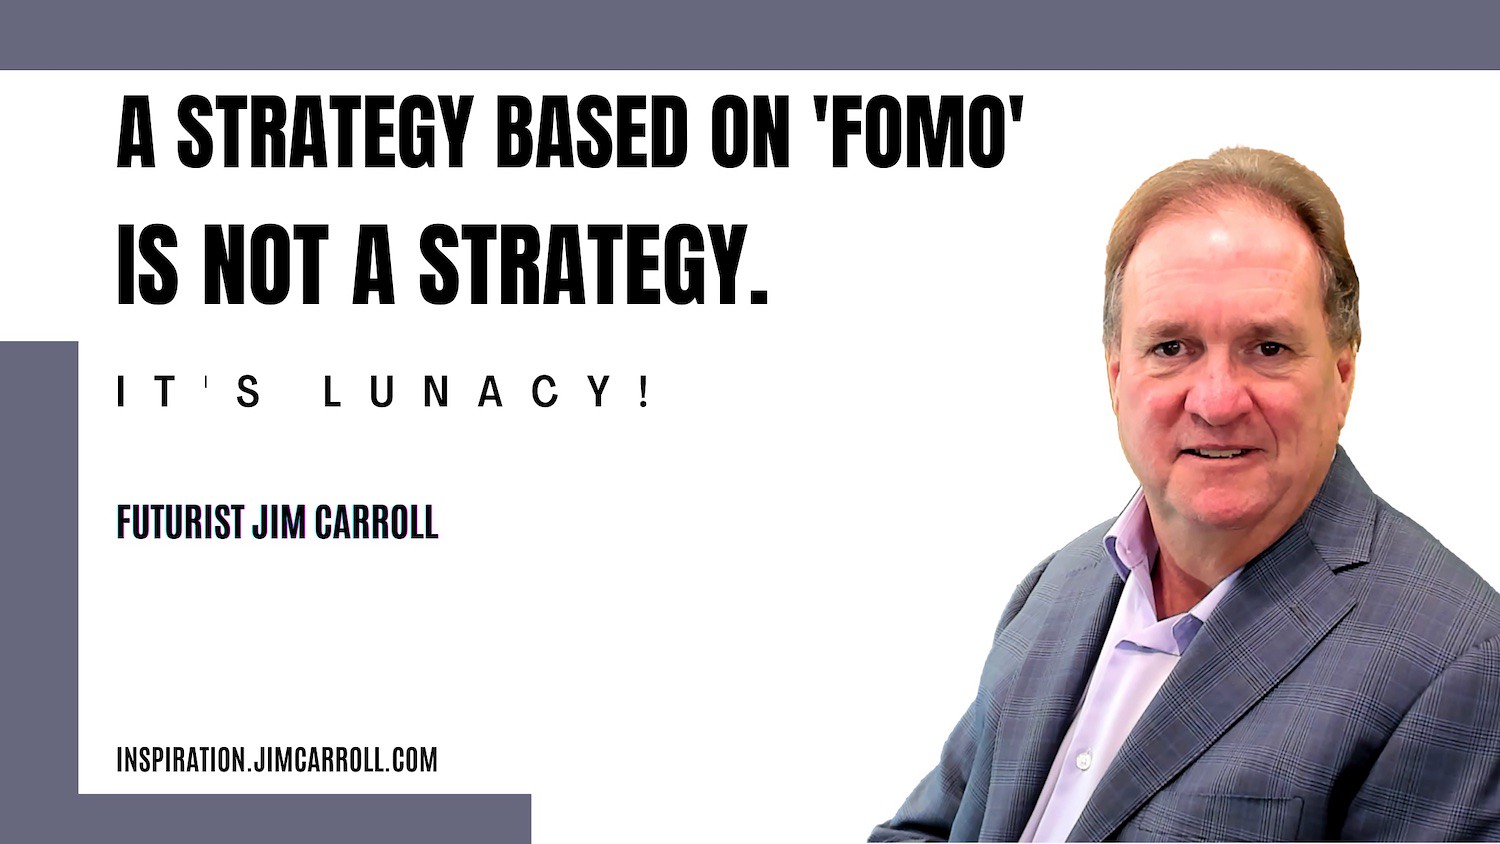 "A strategy based on 'FOMO' is not a strategy. It's lunacy" - Futurist Jim Carroll